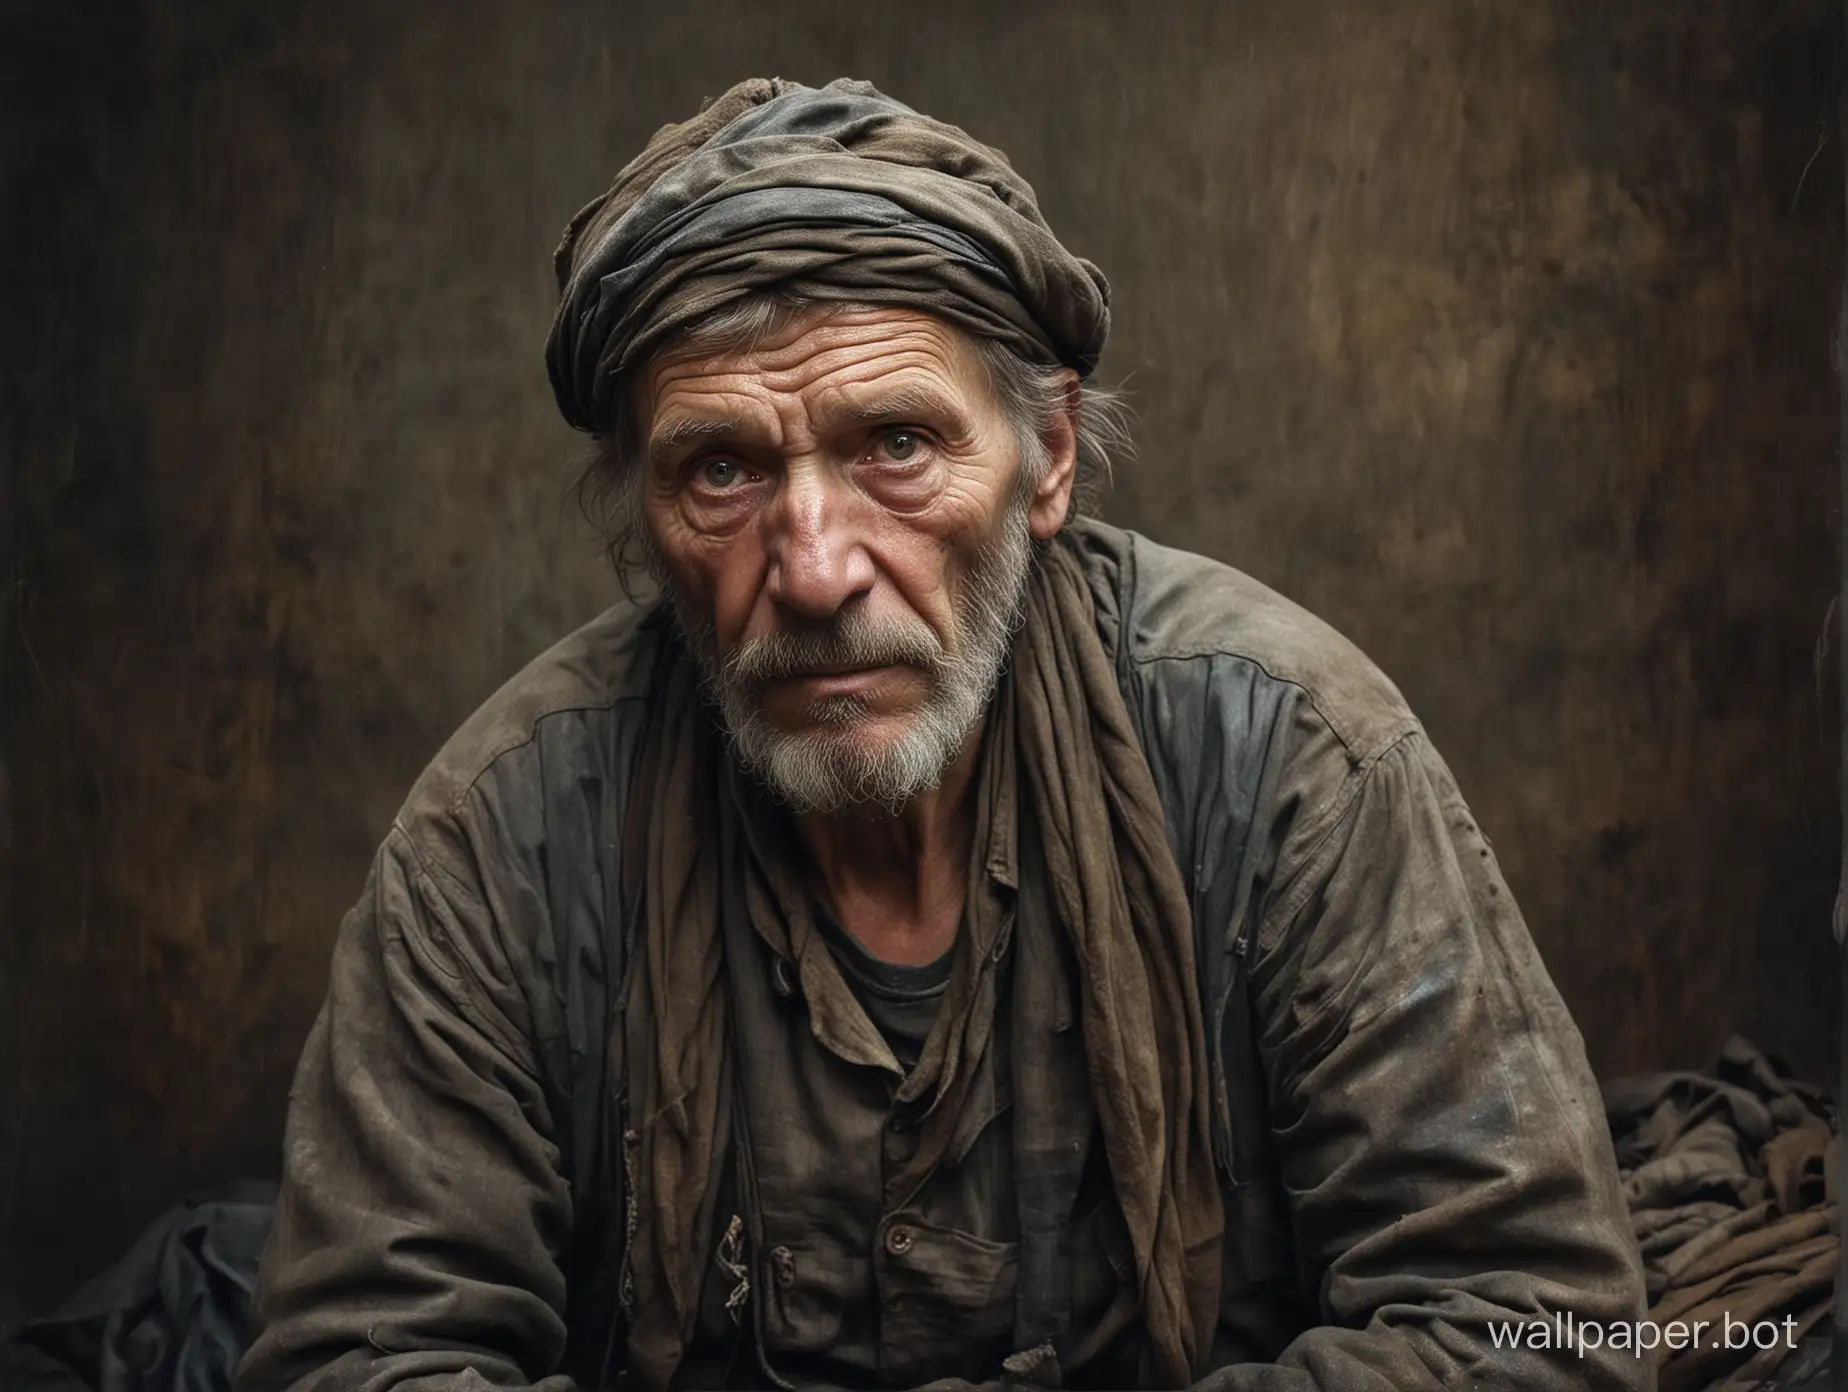 Gritty-Portrait-of-Elderly-Latvian-Worker-in-Rags-Conveys-Overwhelming-Fatigue